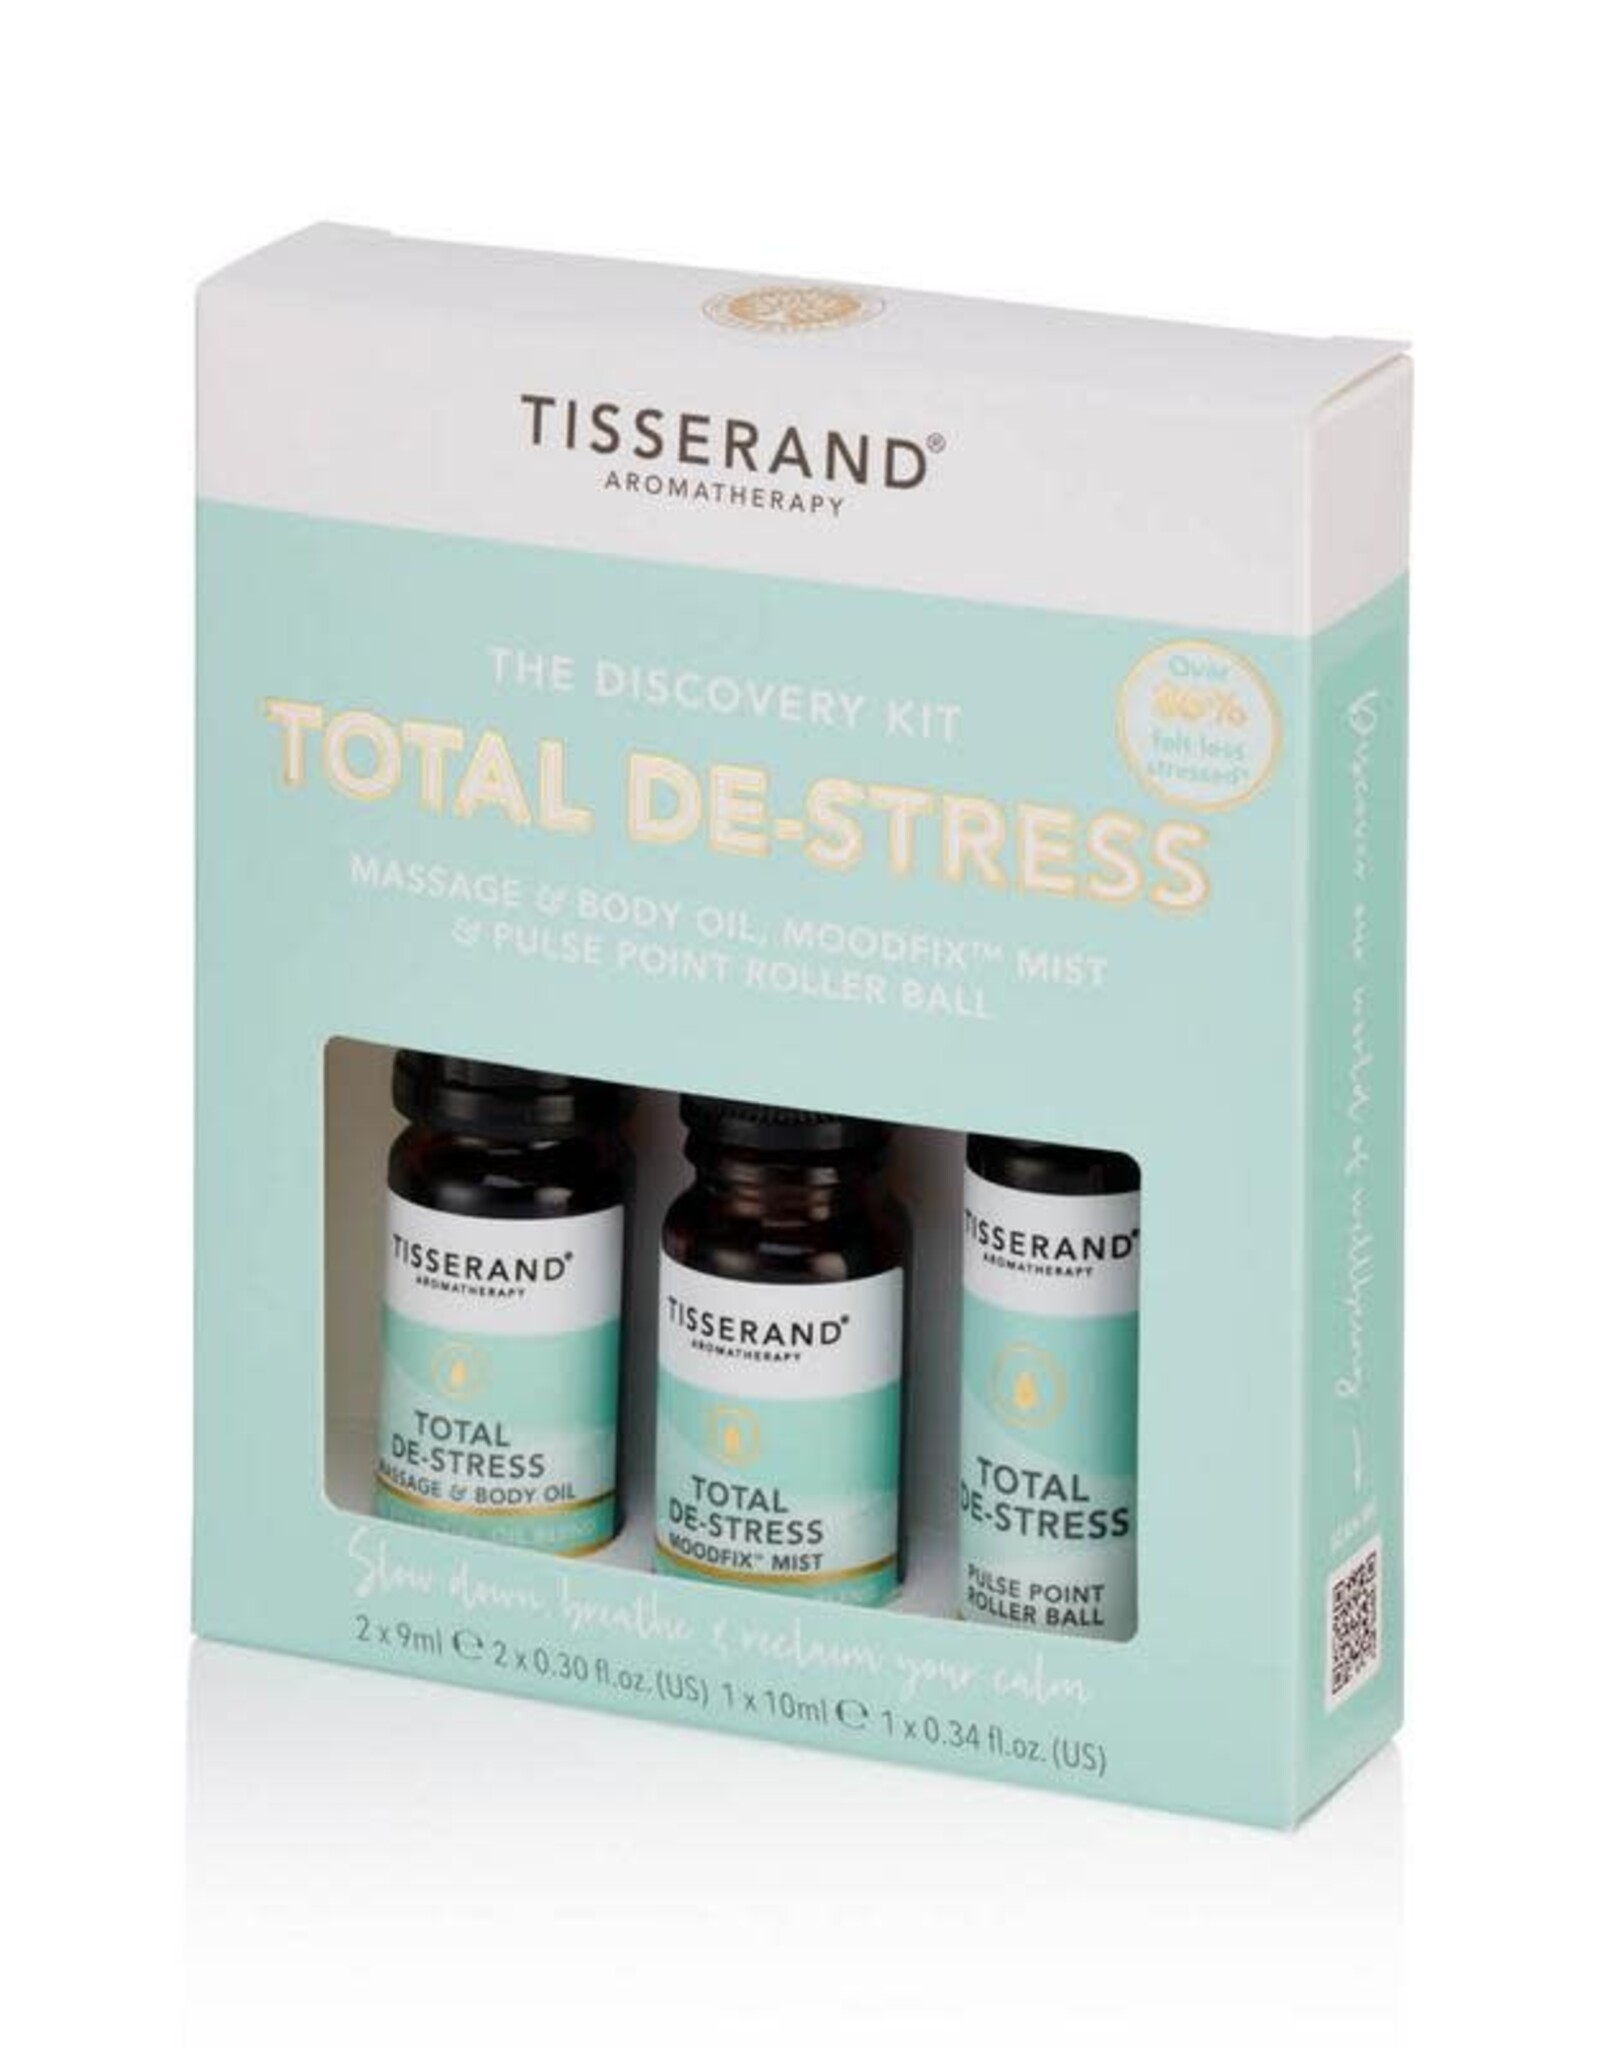 Tisserand Discovery kit total de-stress